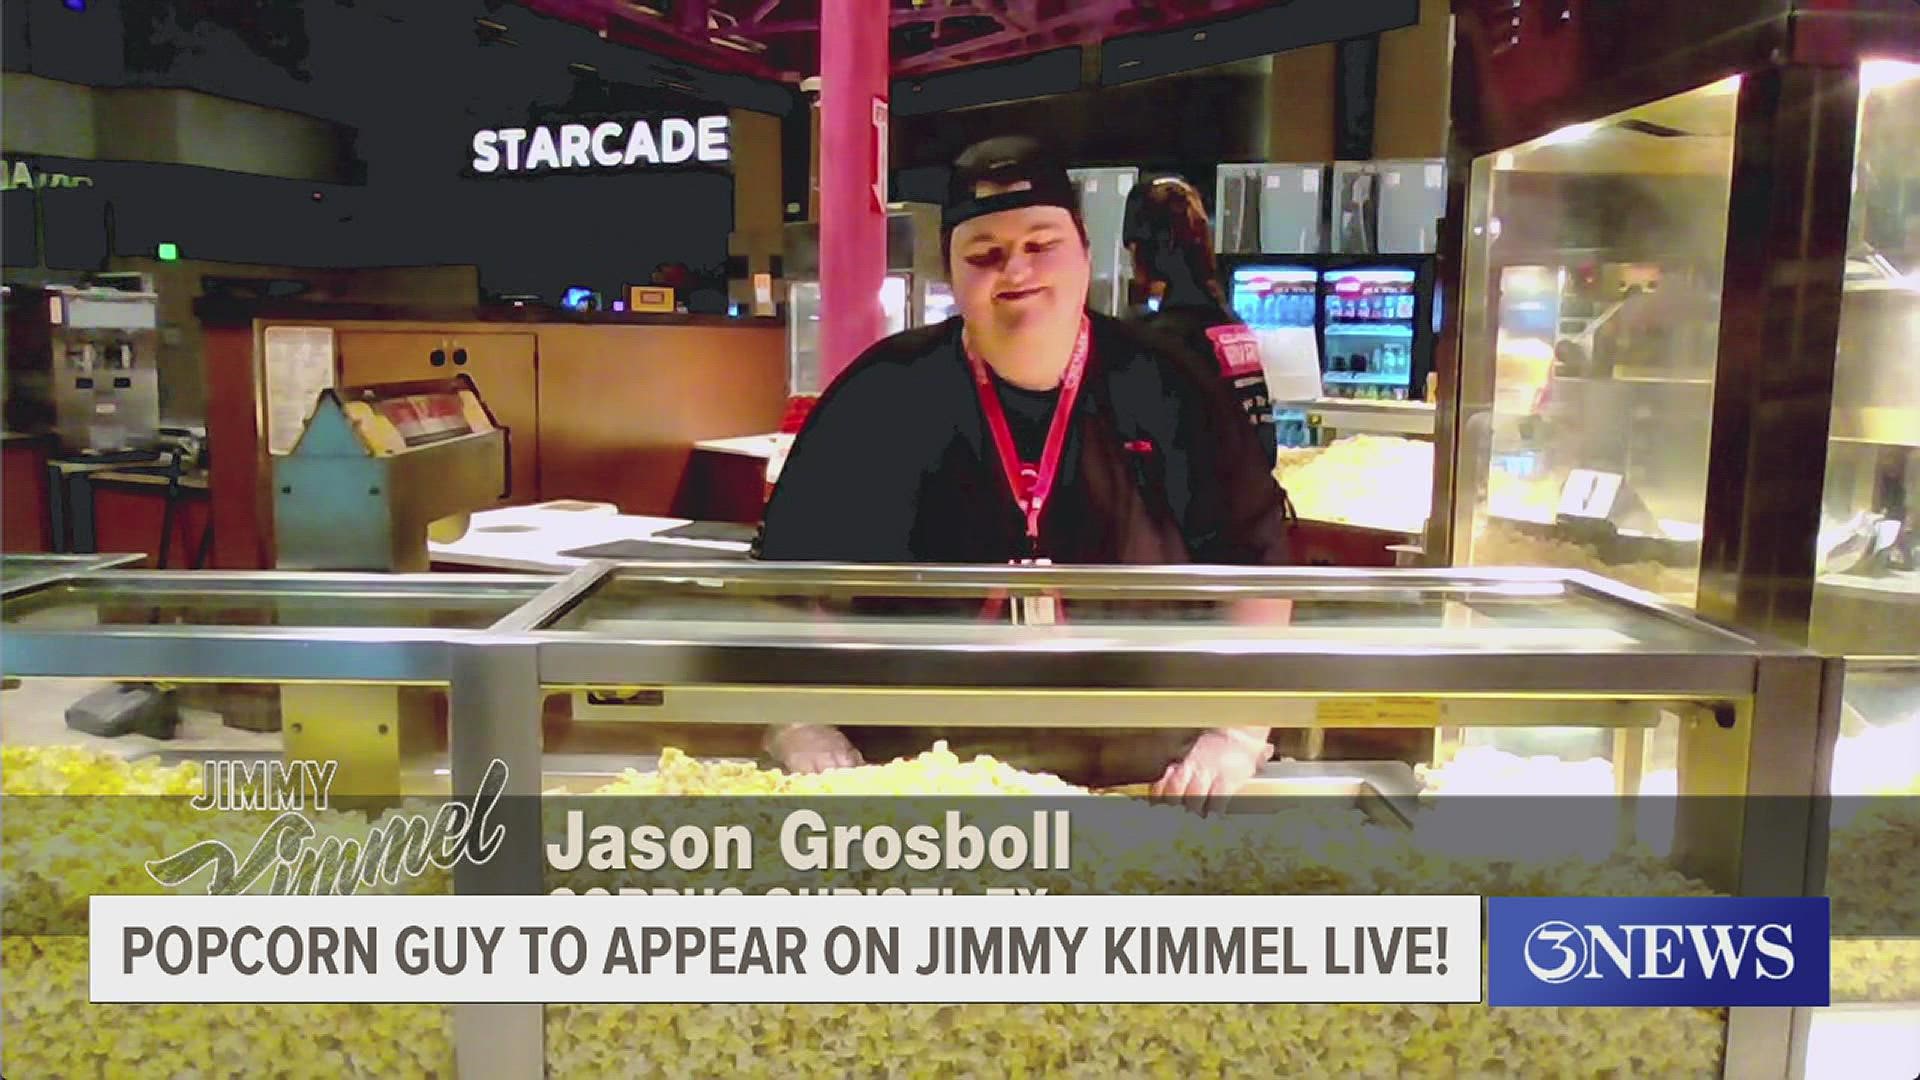 Viral TikTok sensation Jason Grosboll, better known as "Popcorn Guy" got the remote invitation to be on Jimmy Kimmel Live Wednesday.